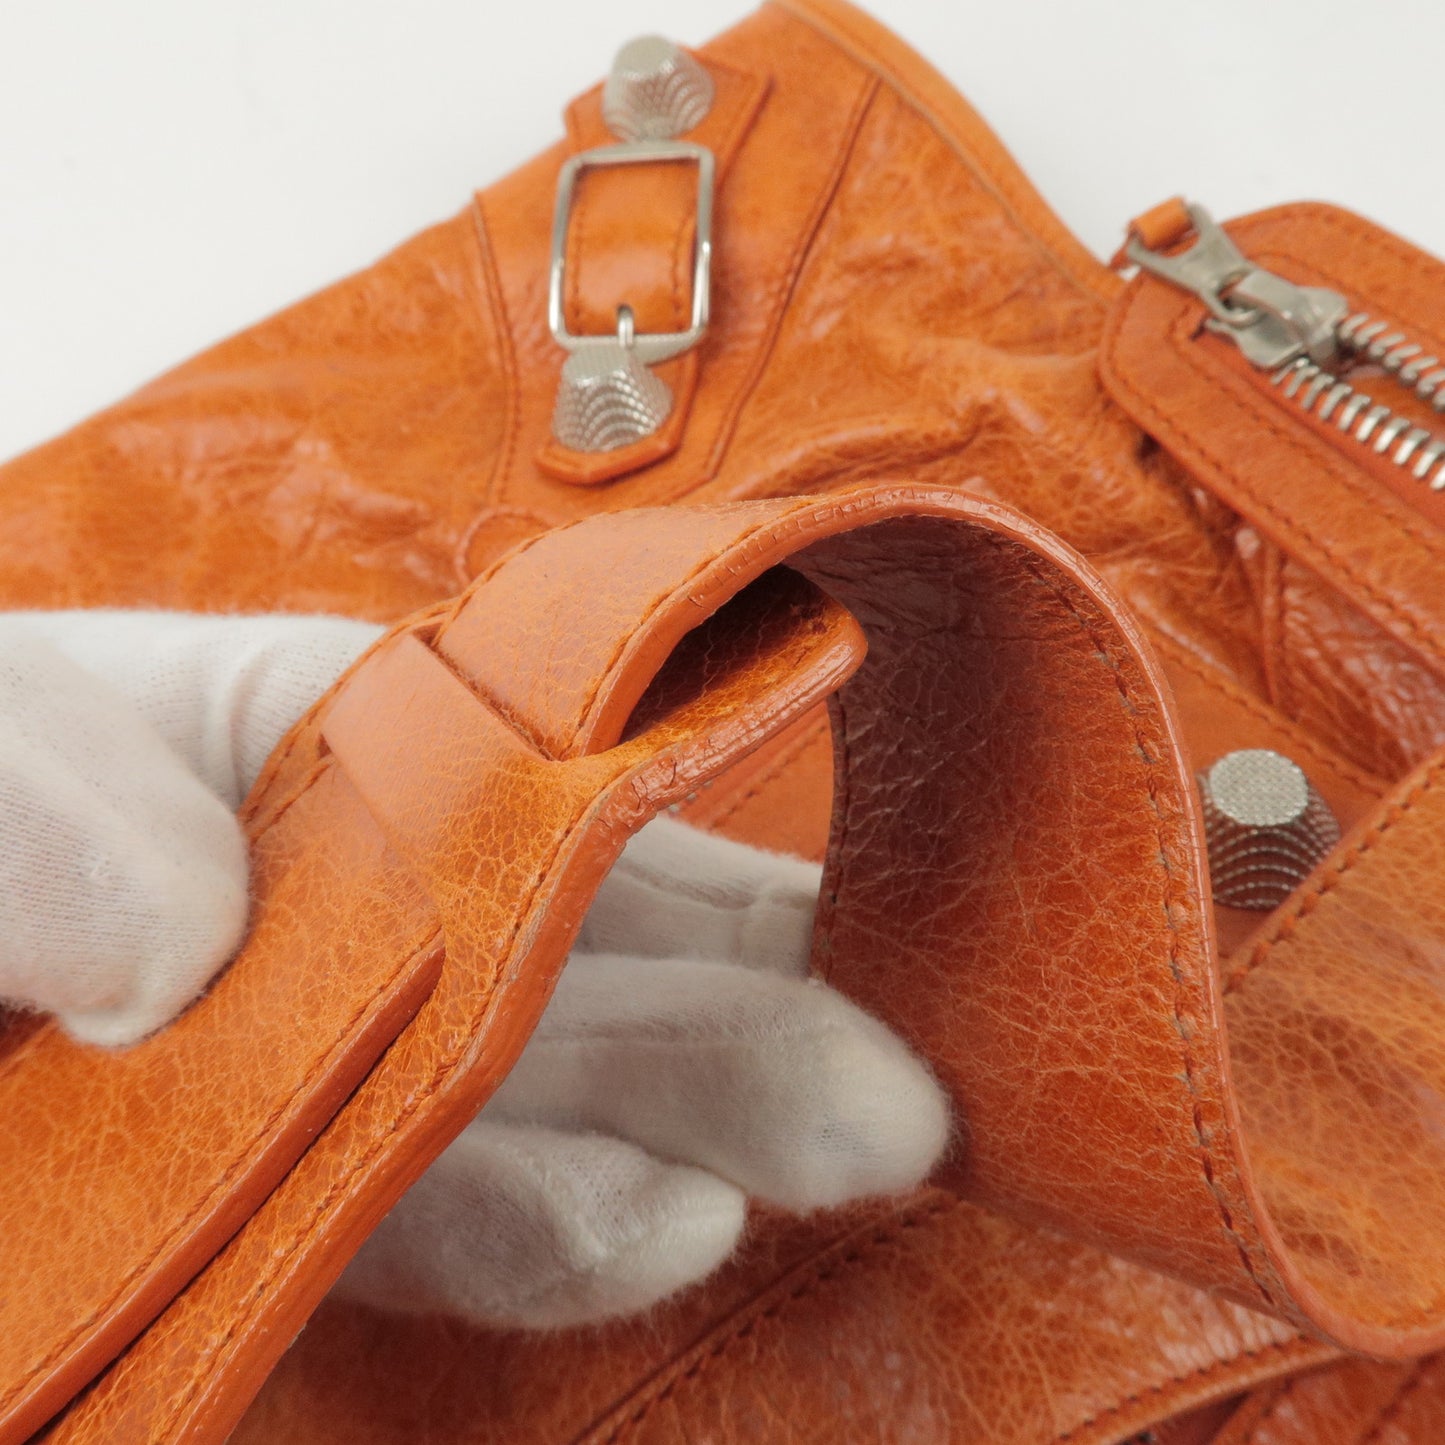 BALENCIAGA The Giant City Leather Hand Bag Orange 173084